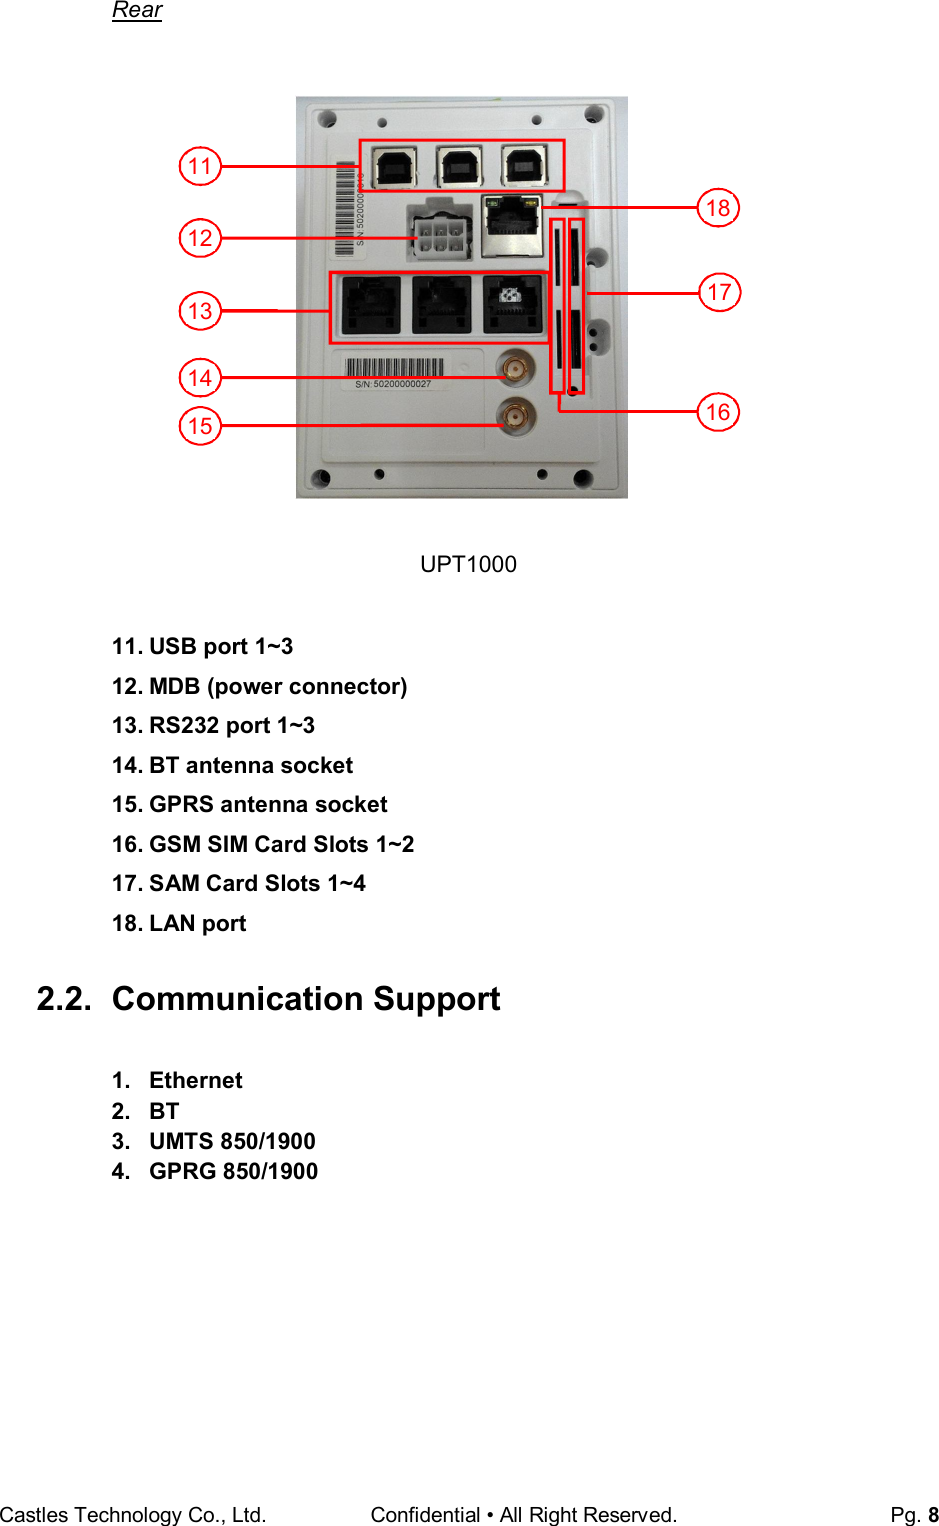 Castles Technology Co., Ltd. Confidential • All Right Reserved.  Pg. 8 Rear                      11. USB port 1~3 12. MDB (power connector) 13. RS232 port 1~3 14. BT antenna socket 15. GPRS antenna socket 16. GSM SIM Card Slots 1~2 17. SAM Card Slots 1~4 18. LAN port  2.2.  Communication Support  1.  Ethernet 2.  BT 3.  UMTS 850/1900 4.  GPRG 850/1900   UPT1000 11 12 13 17 14 18 15 16 